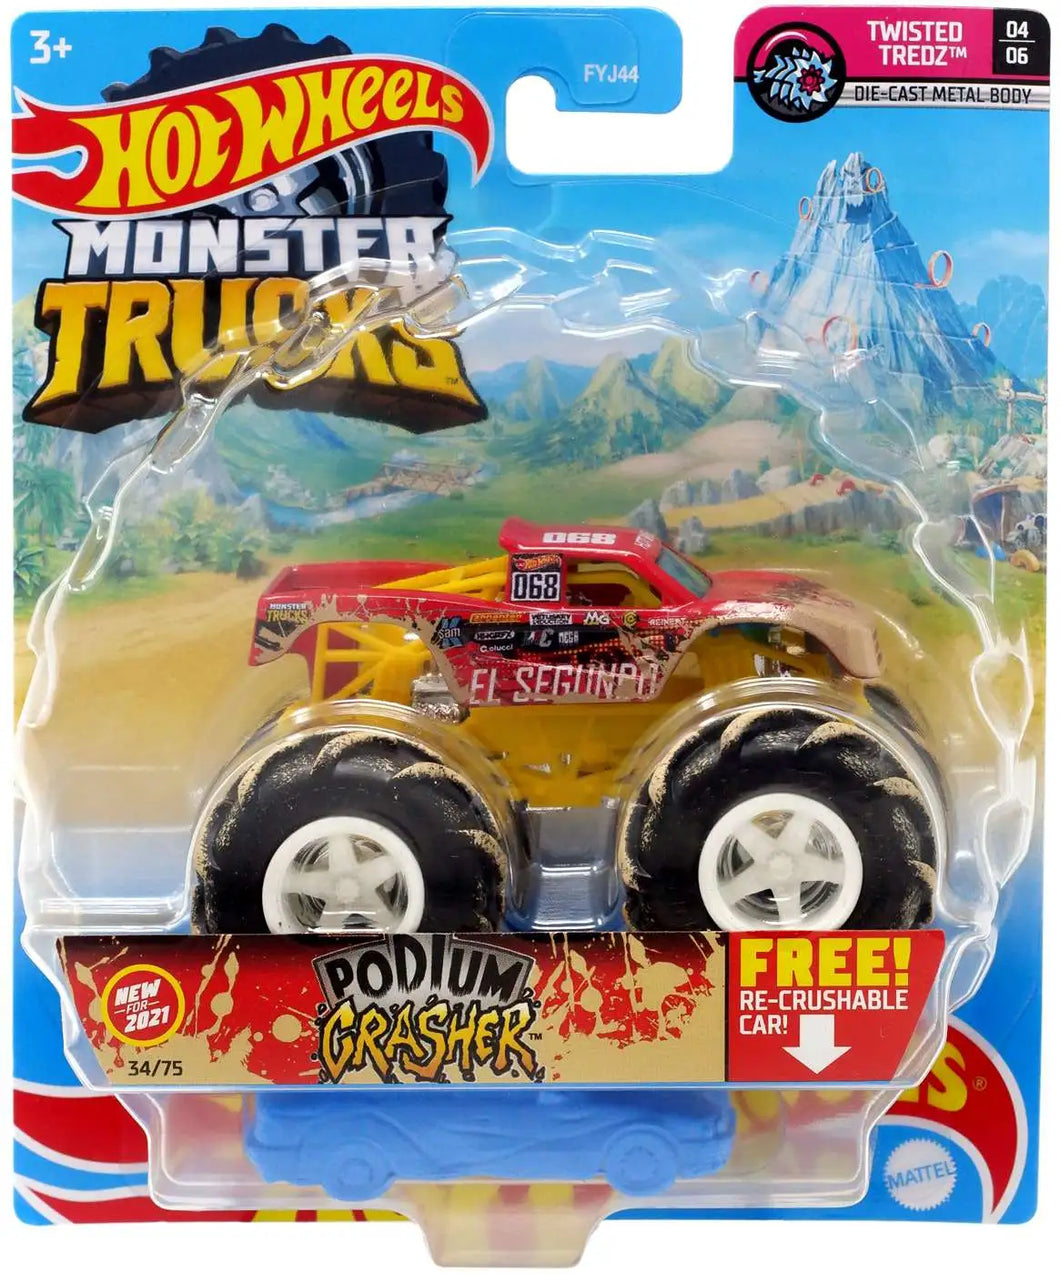 Hot Wheels Monster Truck Twisted Tredz Podium Crasher